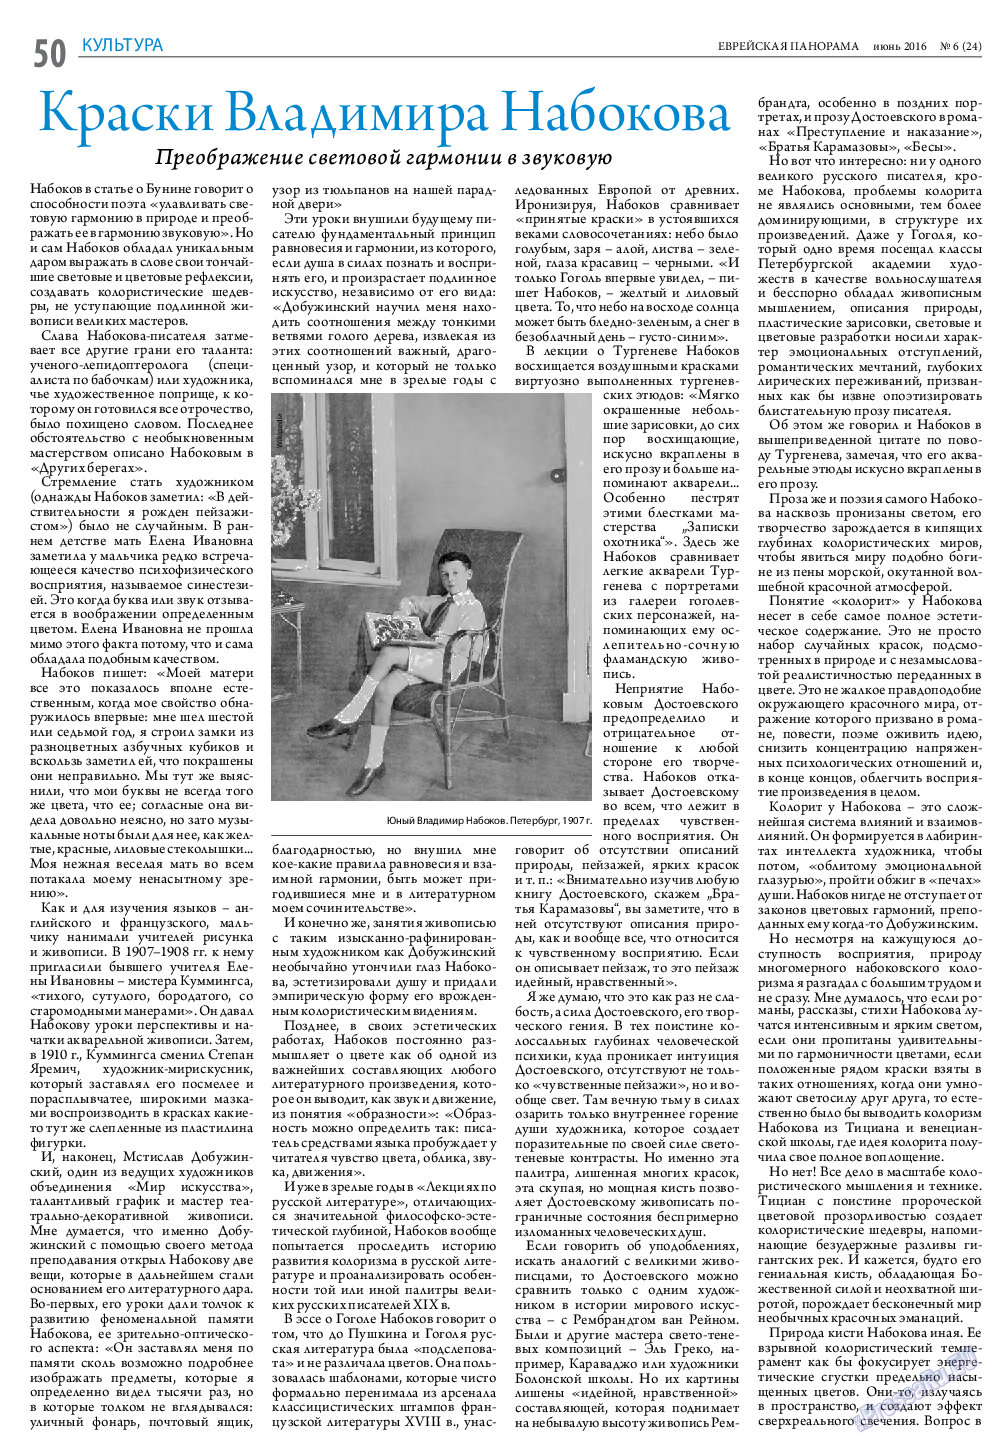 Еврейская панорама, газета. 2016 №6 стр.50